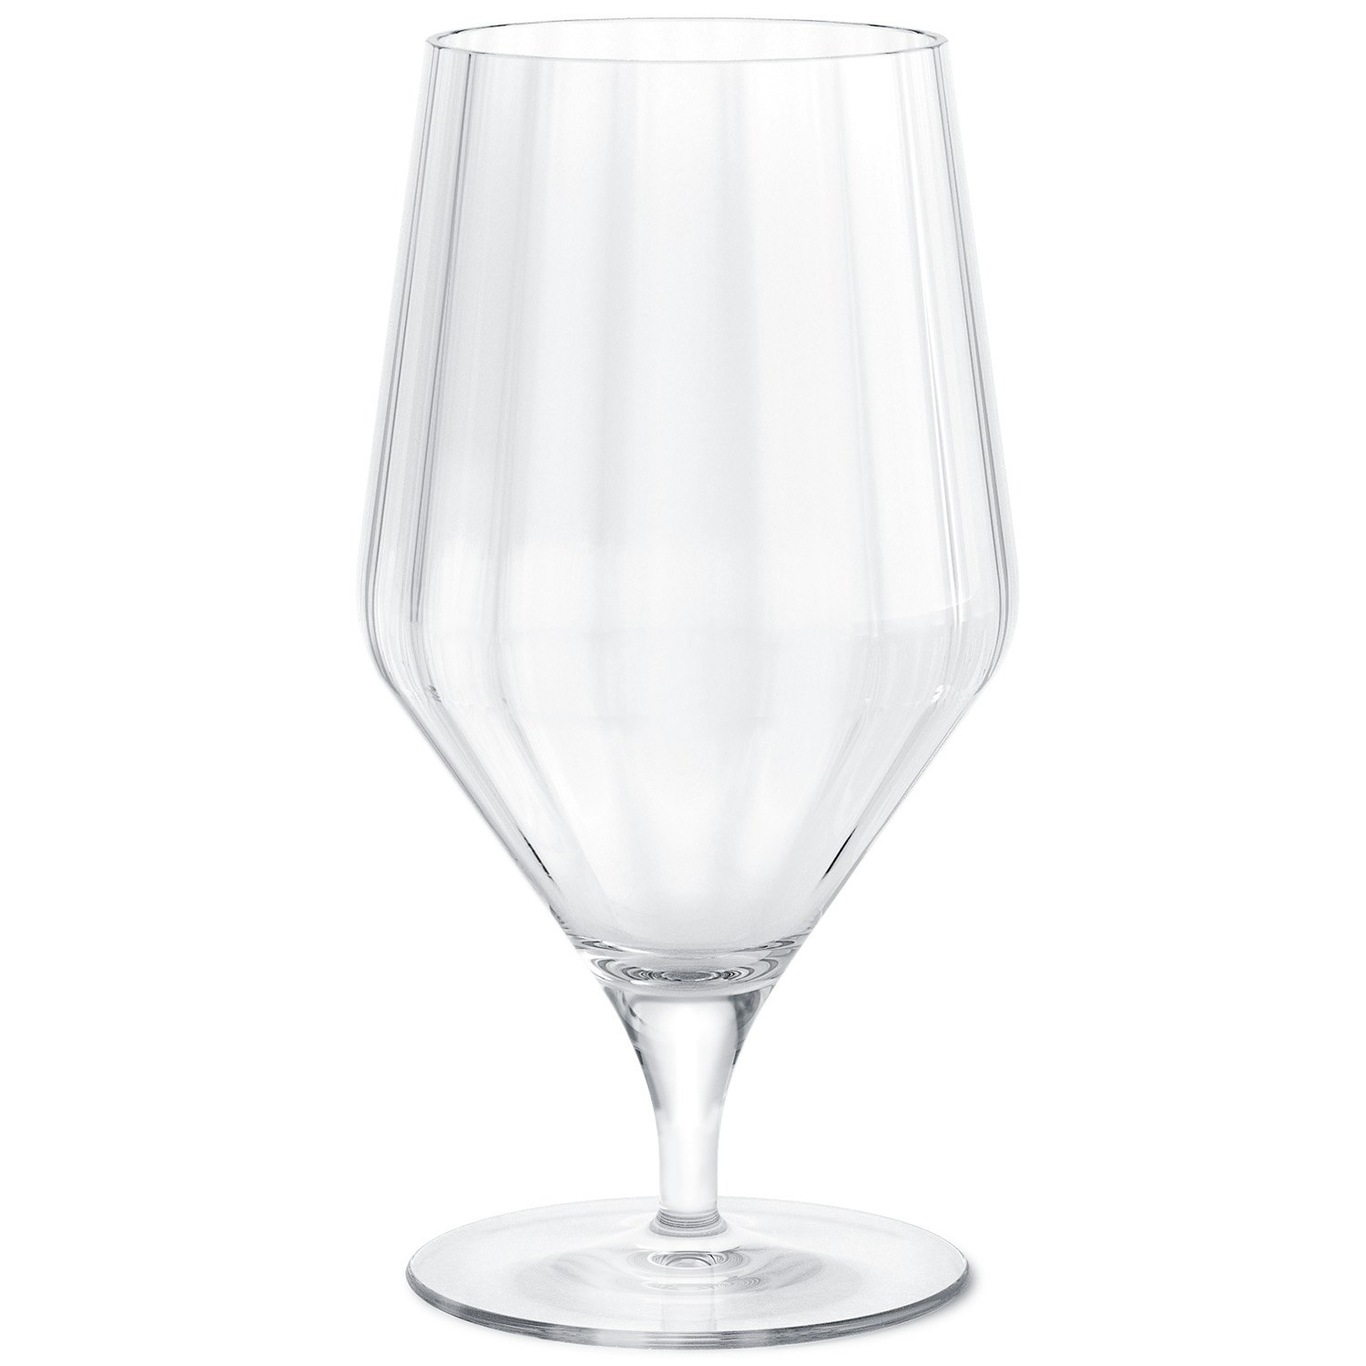 https://royaldesign.com/image/2/georg-jensen-bernadotte-beer-glass-glass-crystalline-45-cl-6-pcs-0?w=800&quality=80